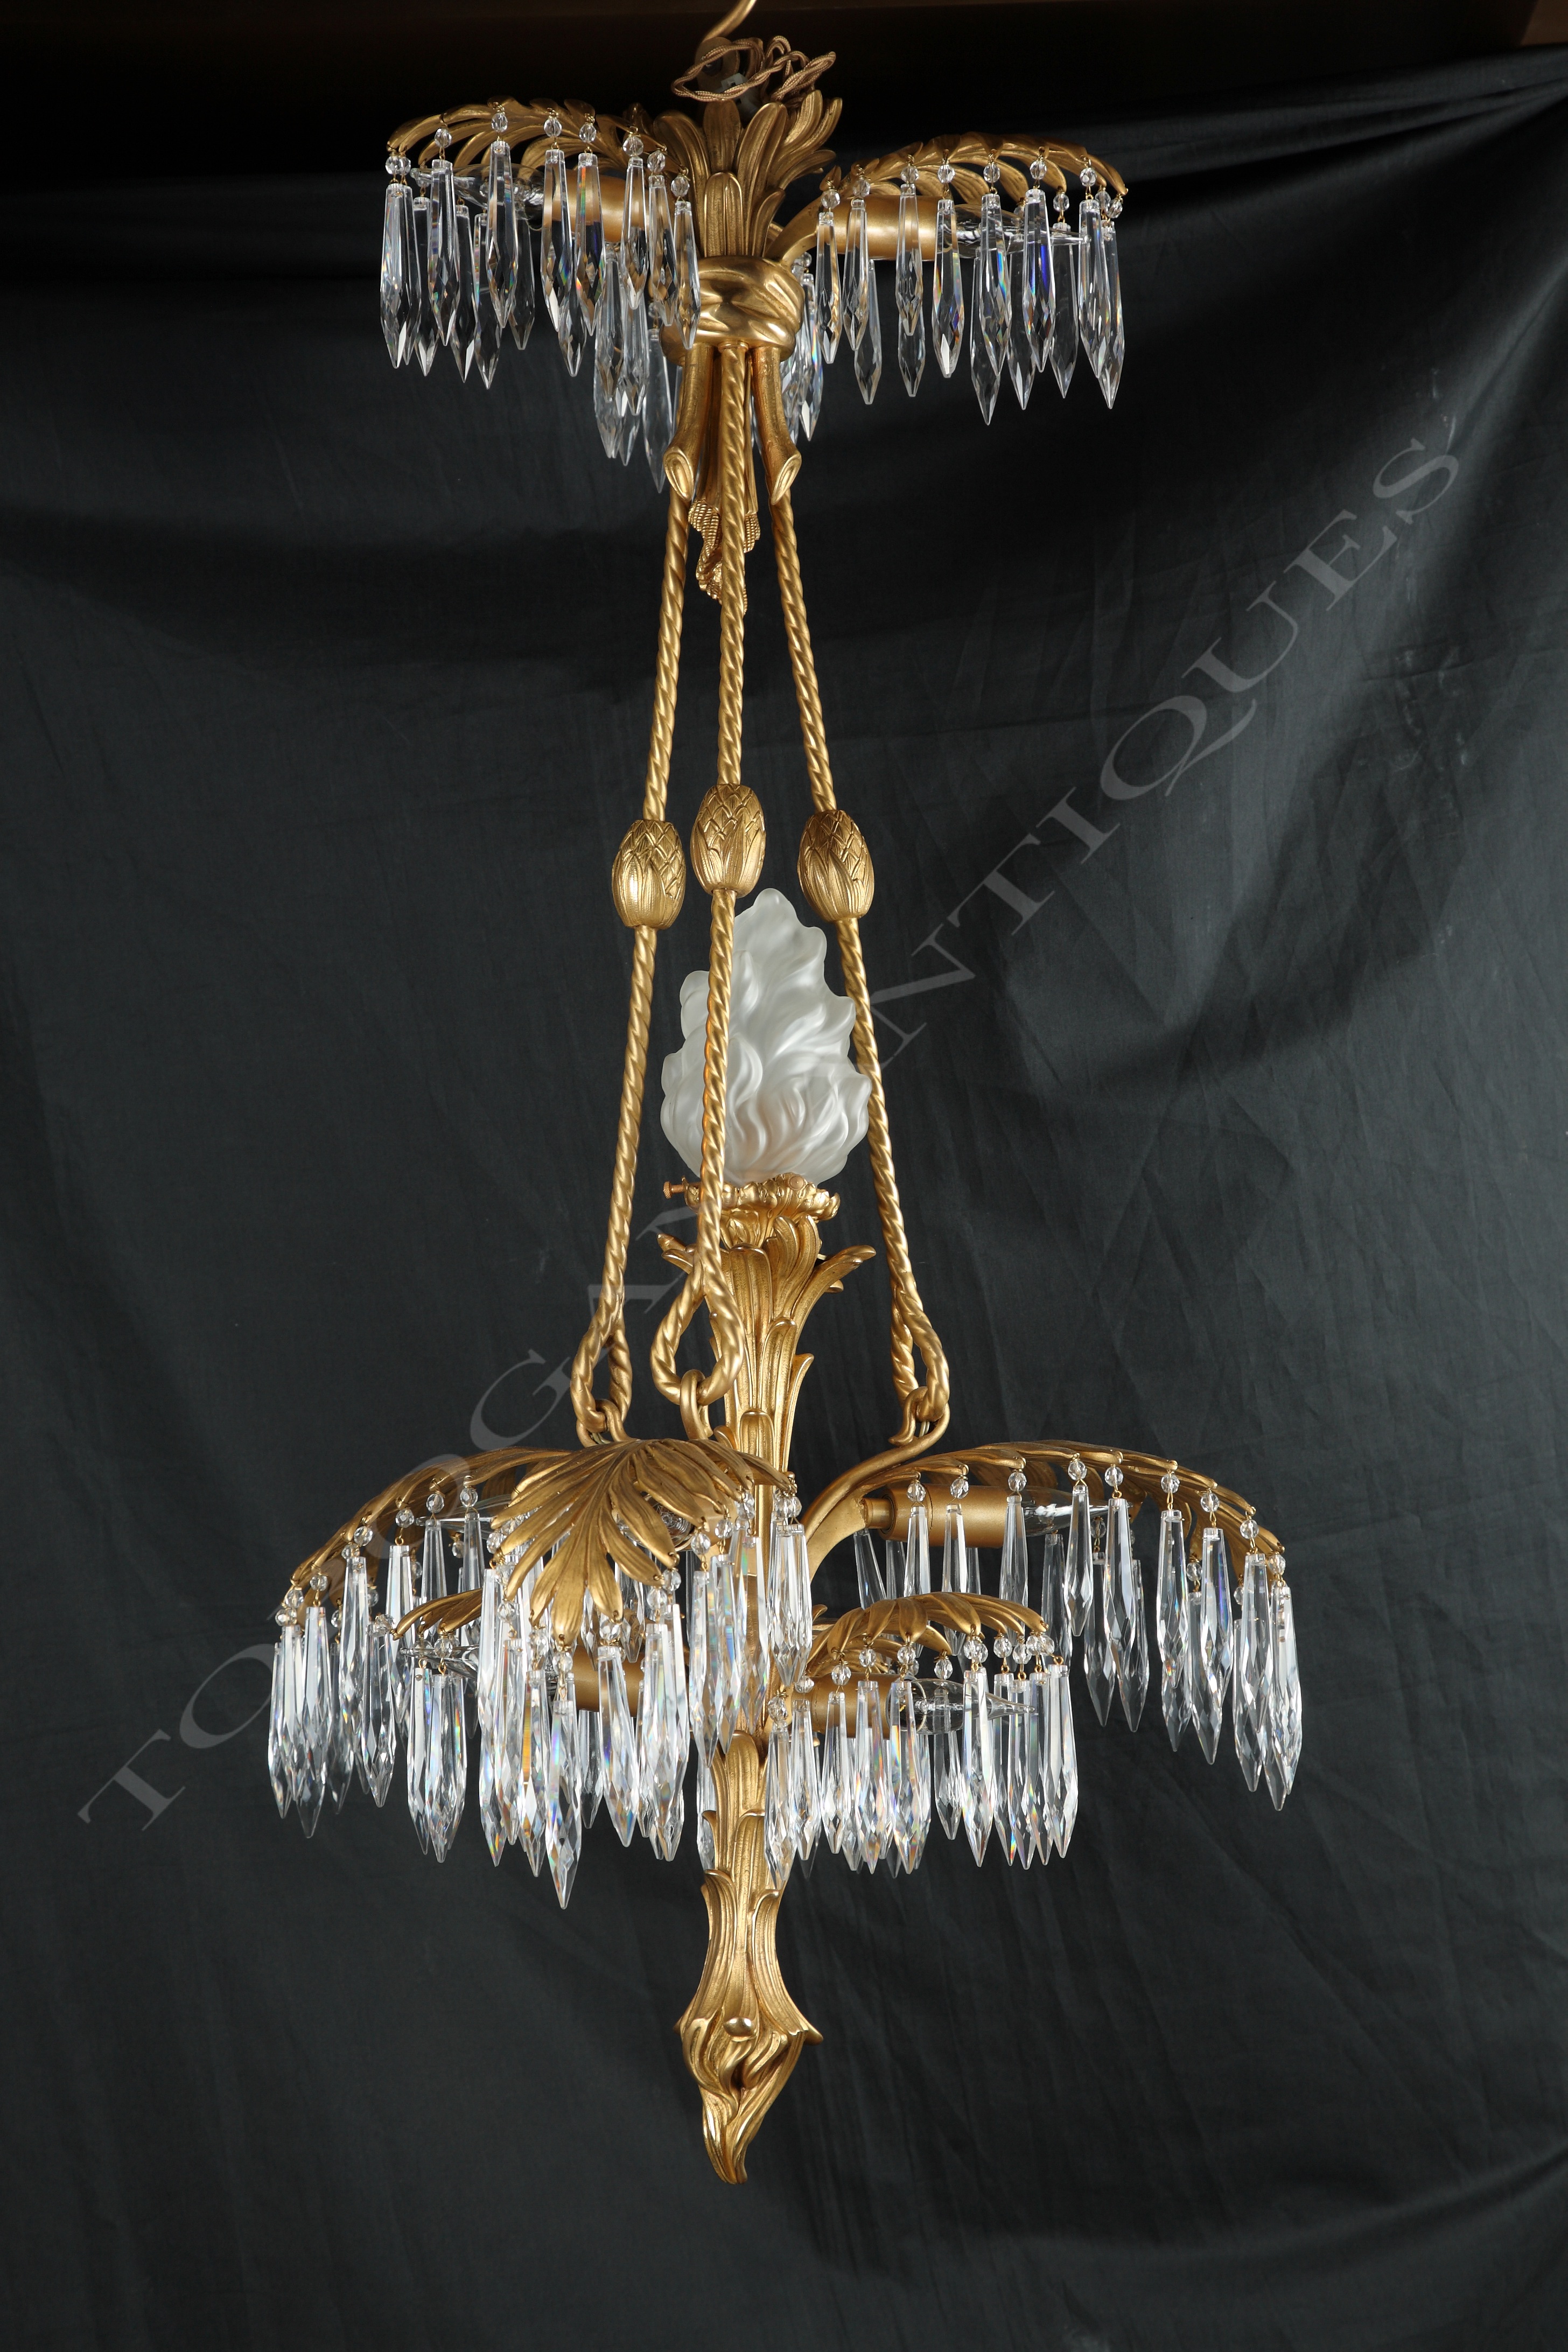 Beautiful “Palm” chandelier